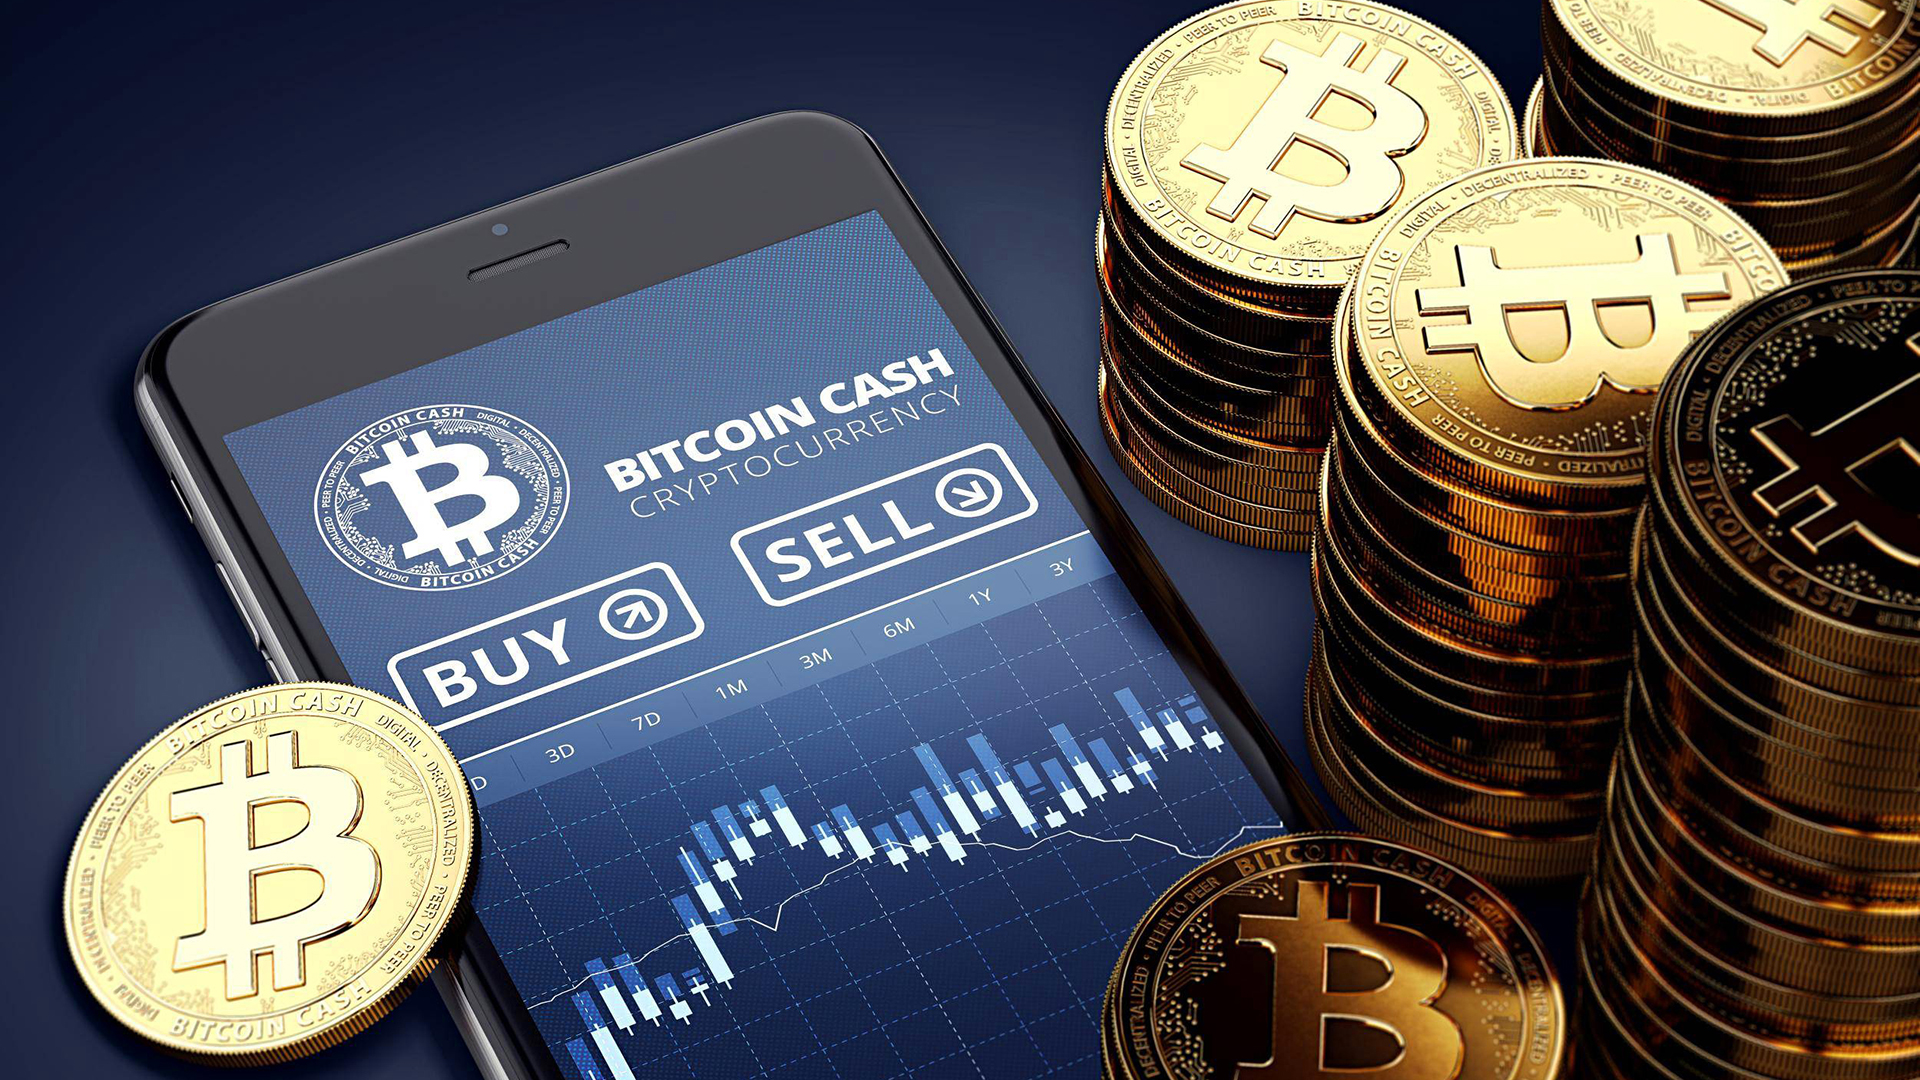 Decrypt Bitcoin Cash Price Up 15% Since Hard Fork